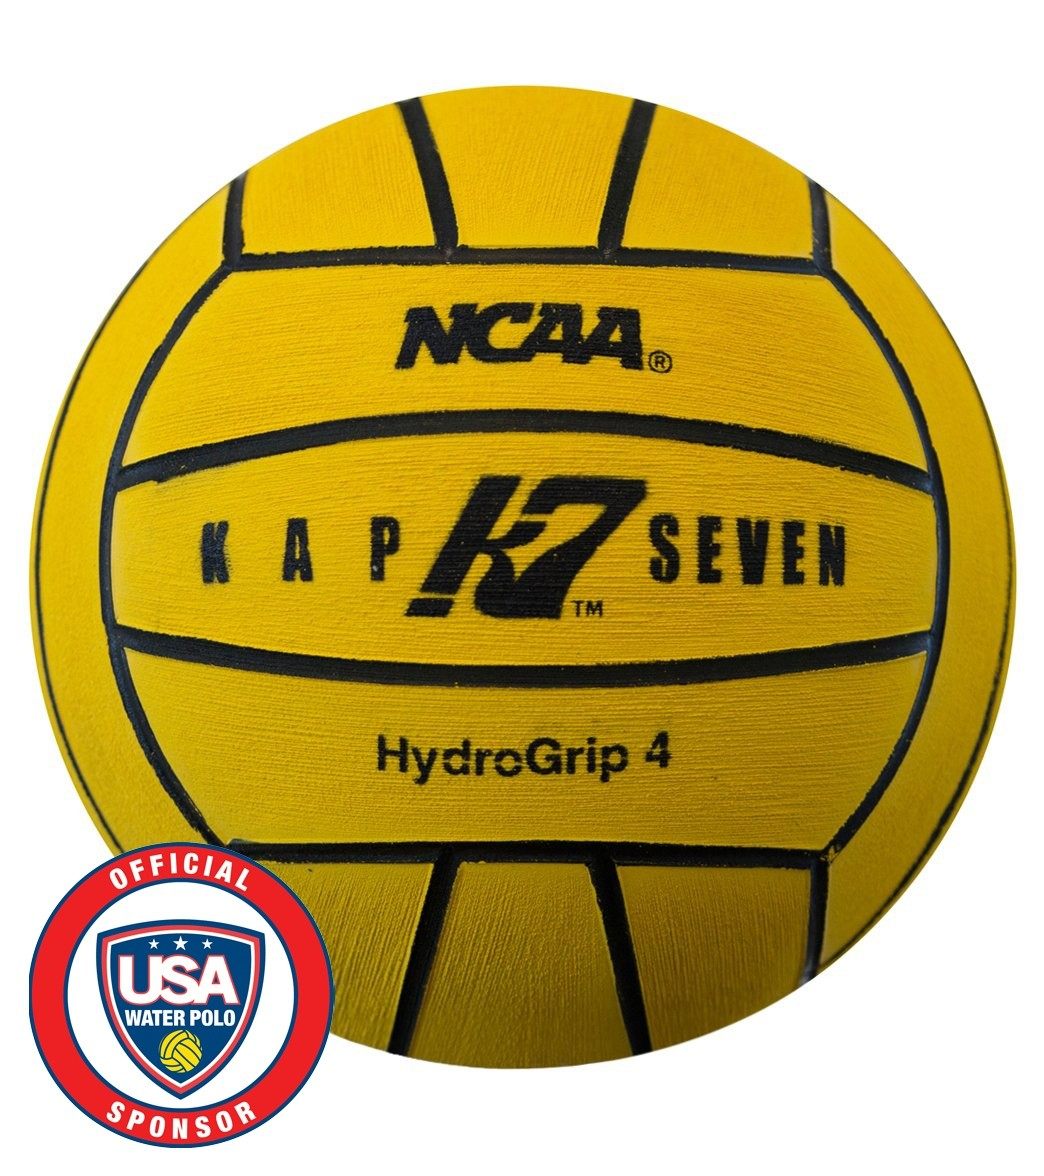 KAP7 Size 4 HydroGrip Water Polo Ball (NCAA, CWPA)